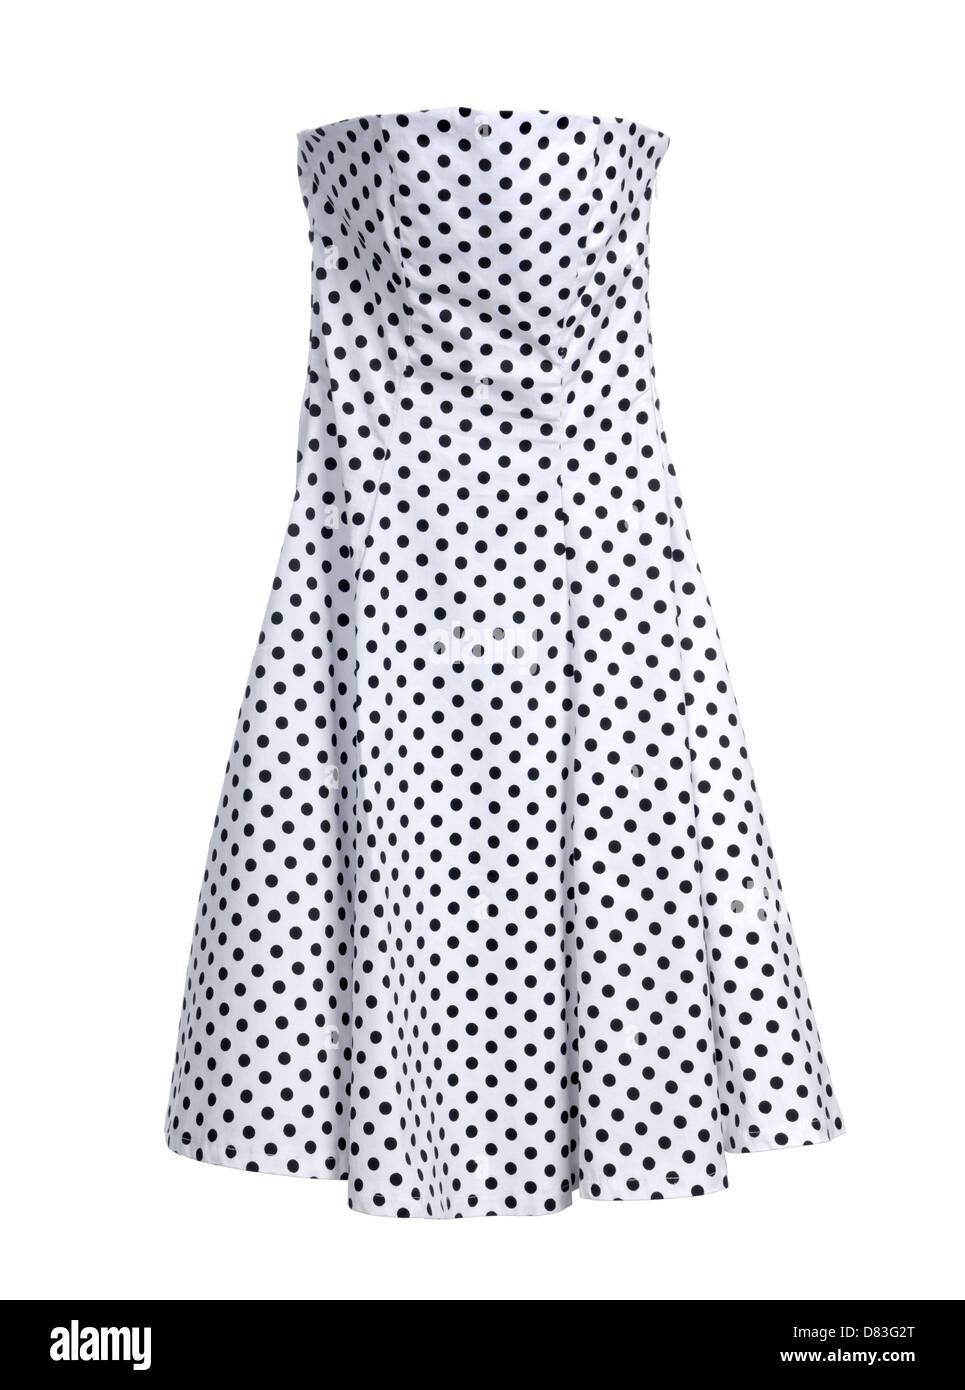 White polka dot dress isolati su sfondo bianco Foto Stock